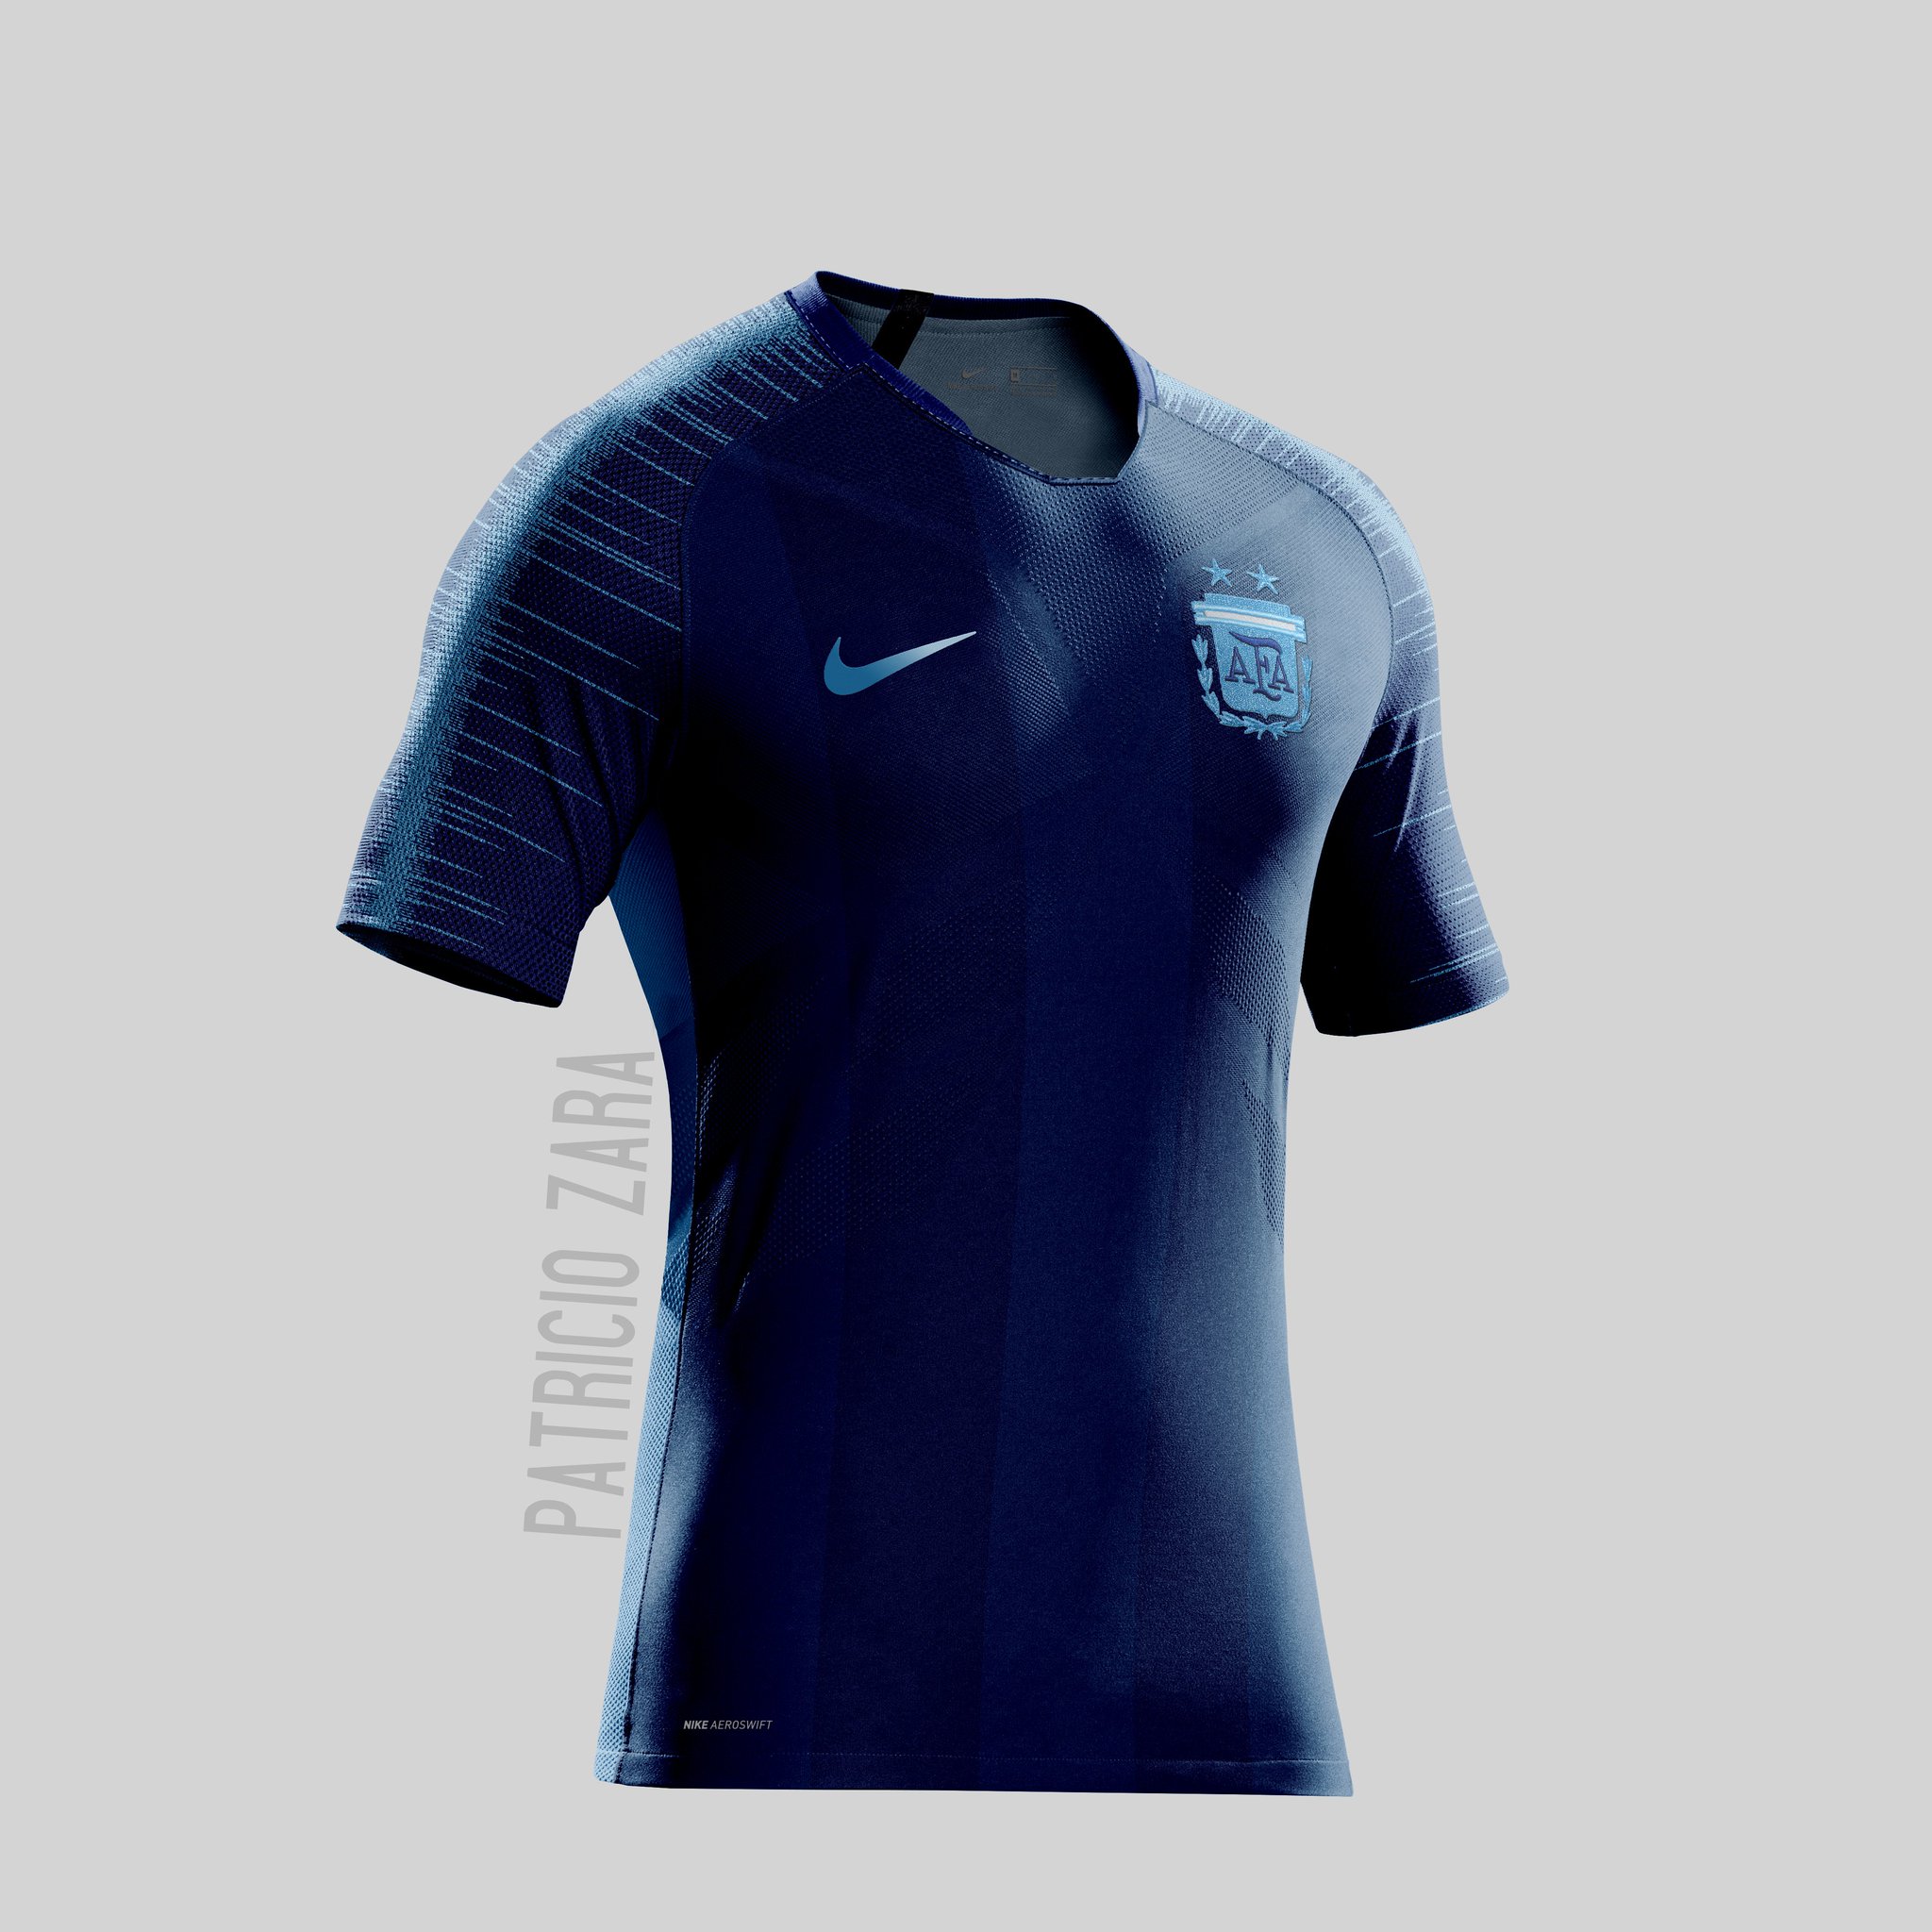 Zpe Design On Twitter Argentina Fantasy Nike Template Oneblacktie Lacasacablog Casakeros Argentina Camiseta Fantasy